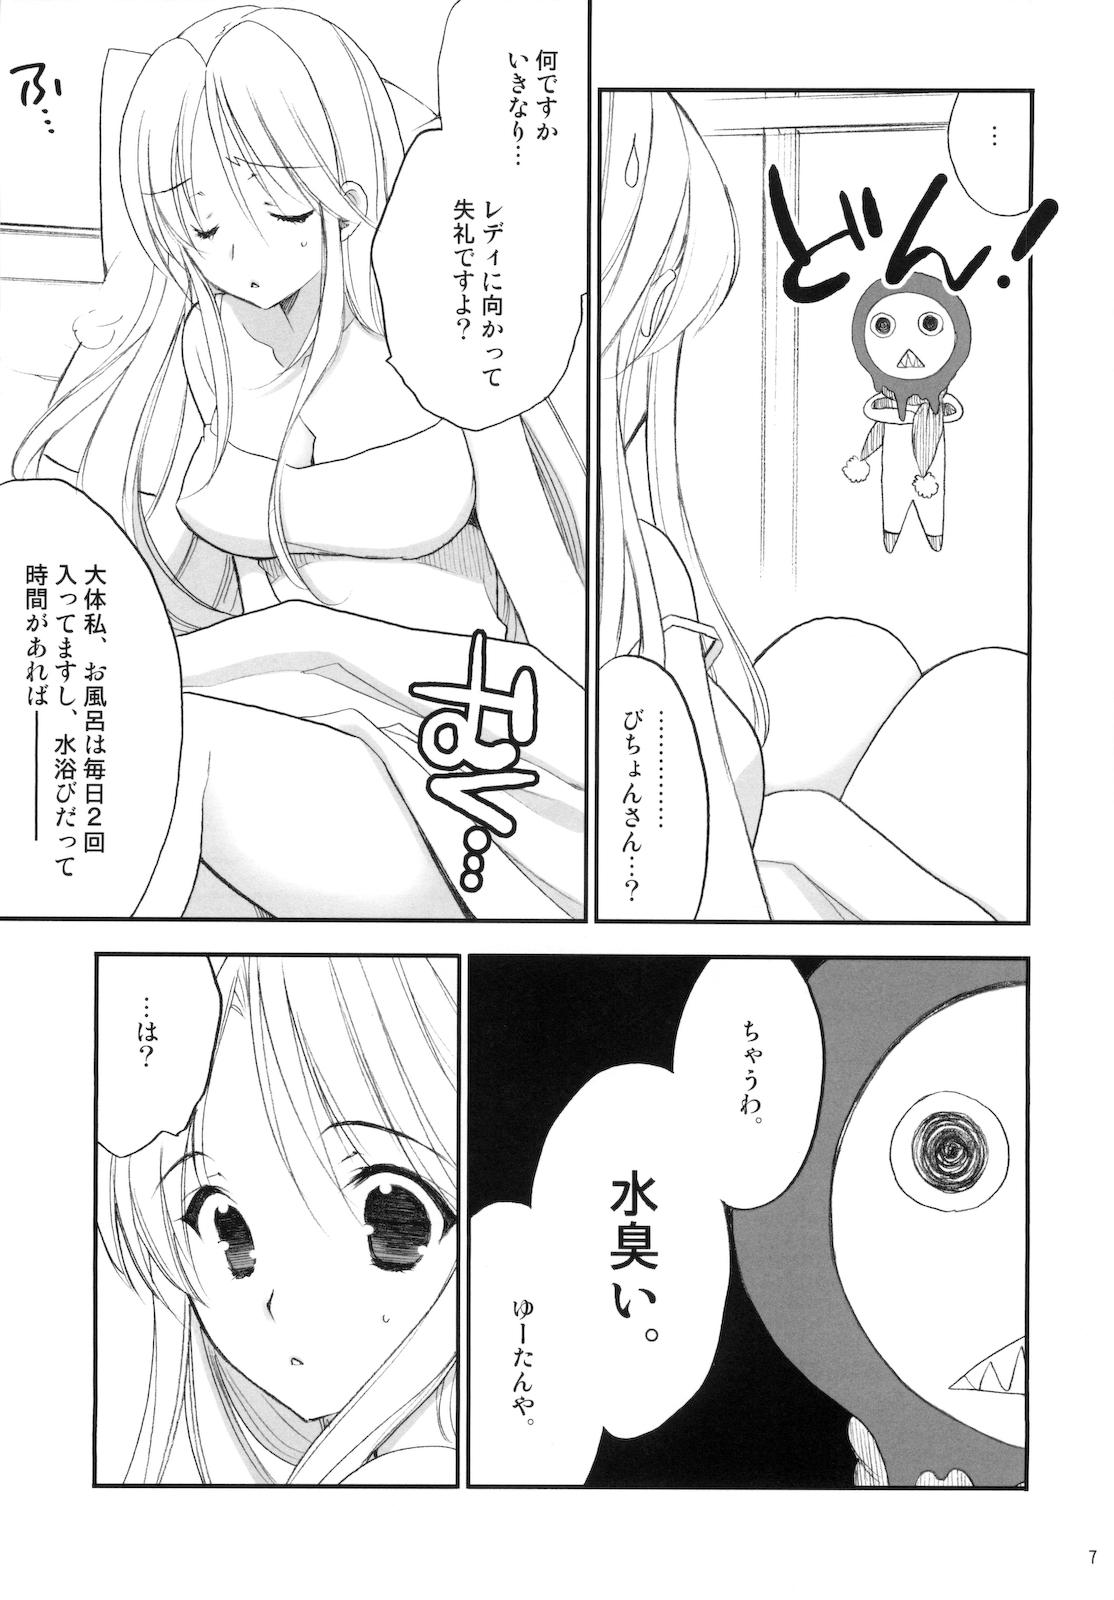 Gayemo Princess Code 03 - Seiken densetsu 3 Foot - Page 7